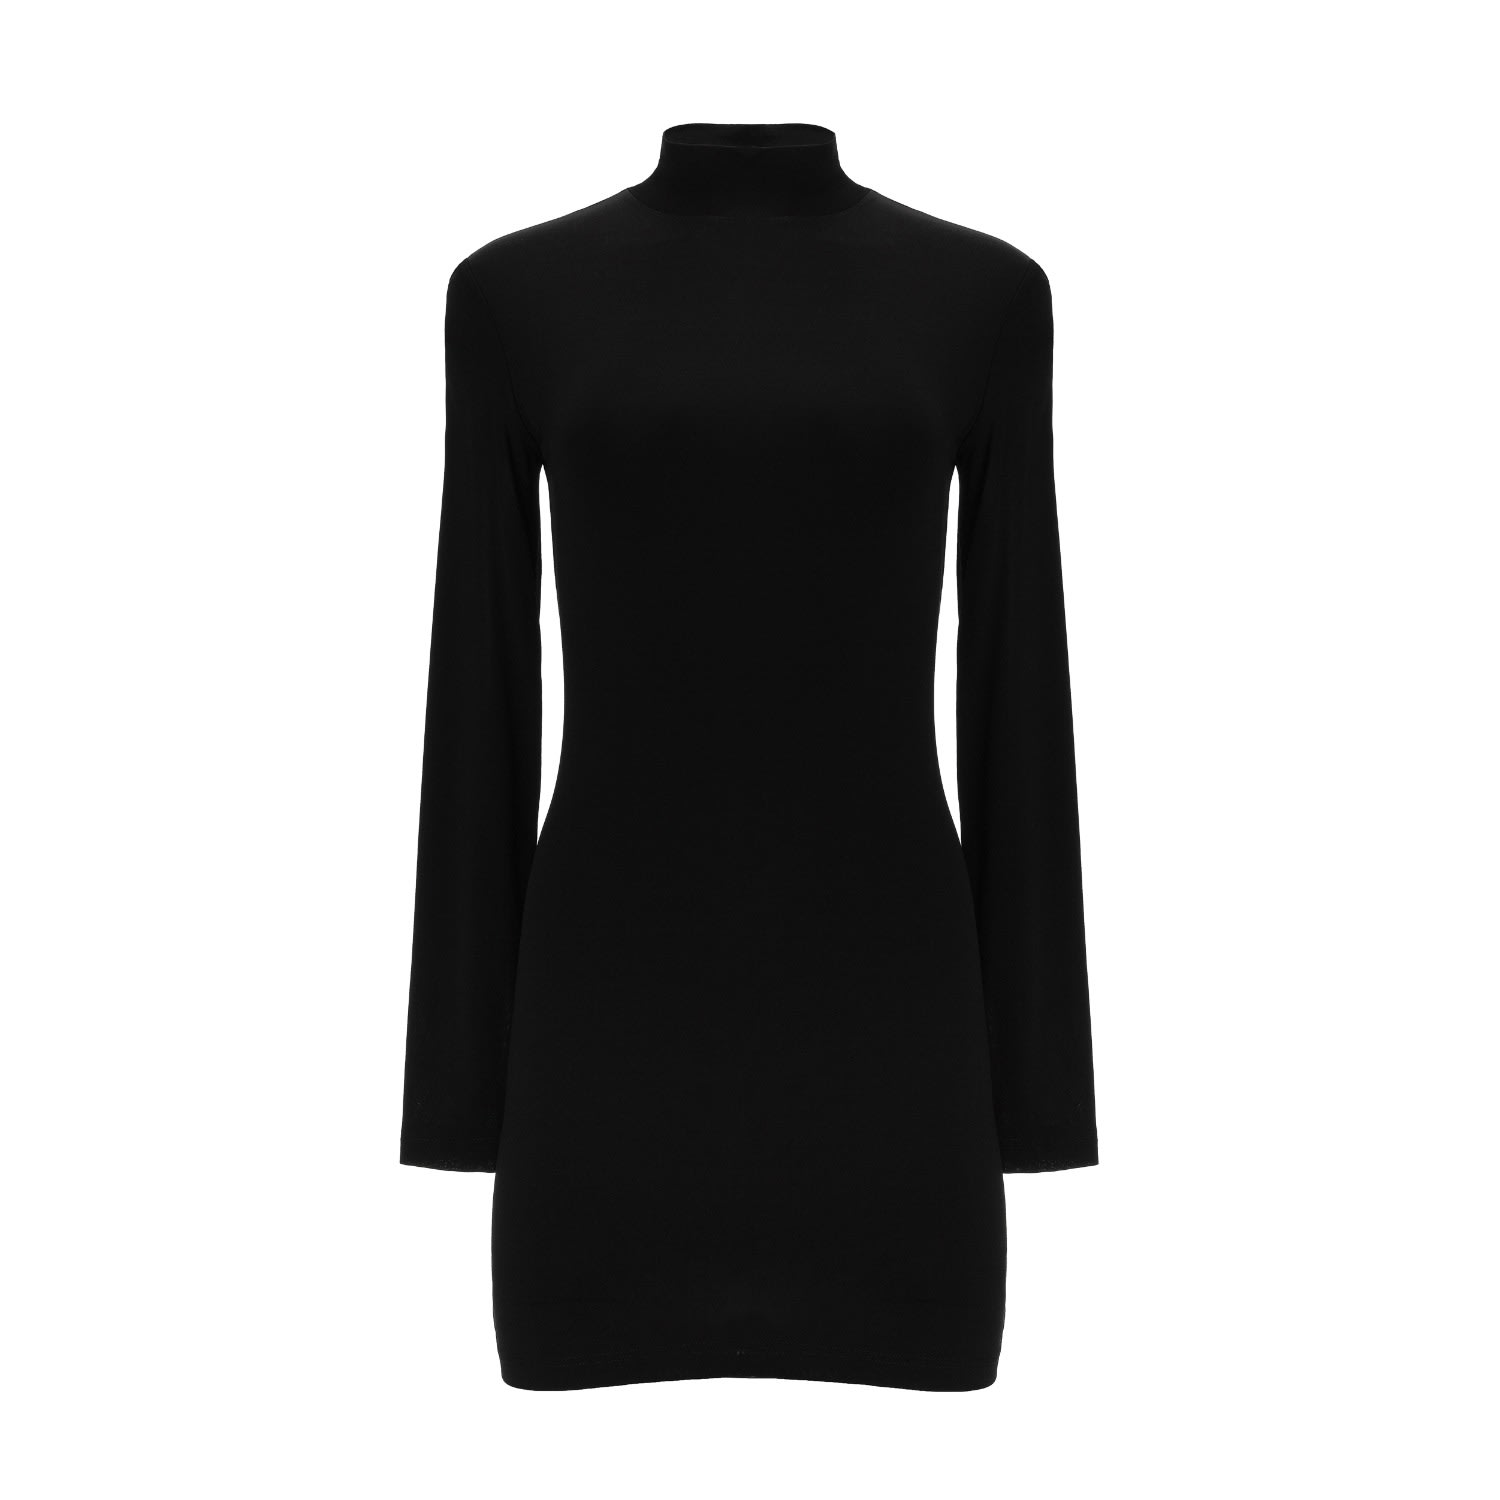 Lita Couture Women's Black Open Back Mini Dress